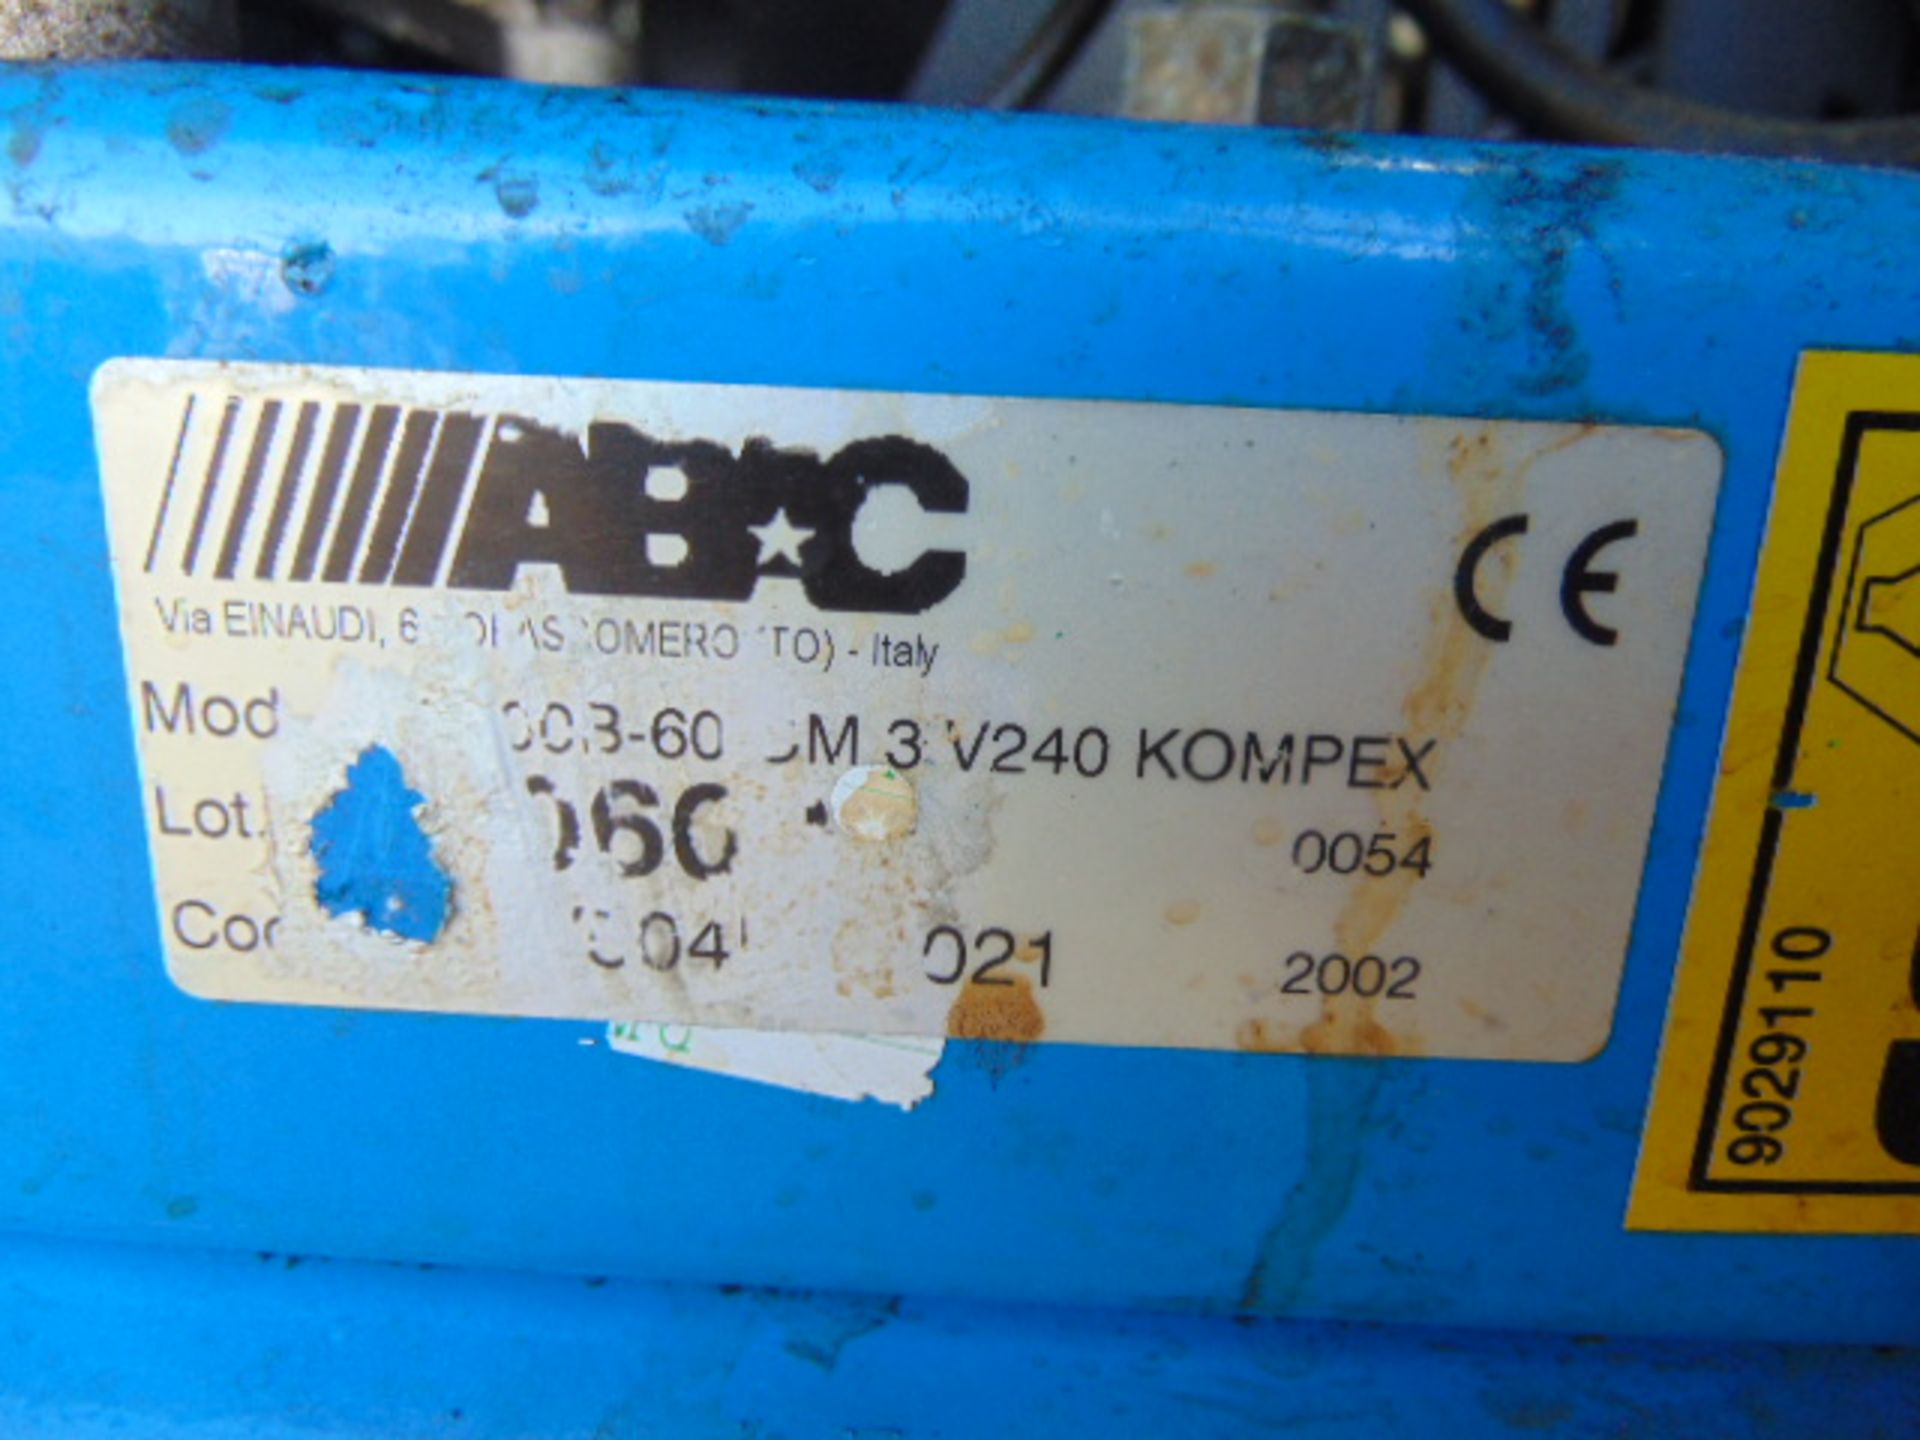 ABAC B 2800B-60 cm 3 V240 Kompex Mobile Air Compressor - Image 6 of 6